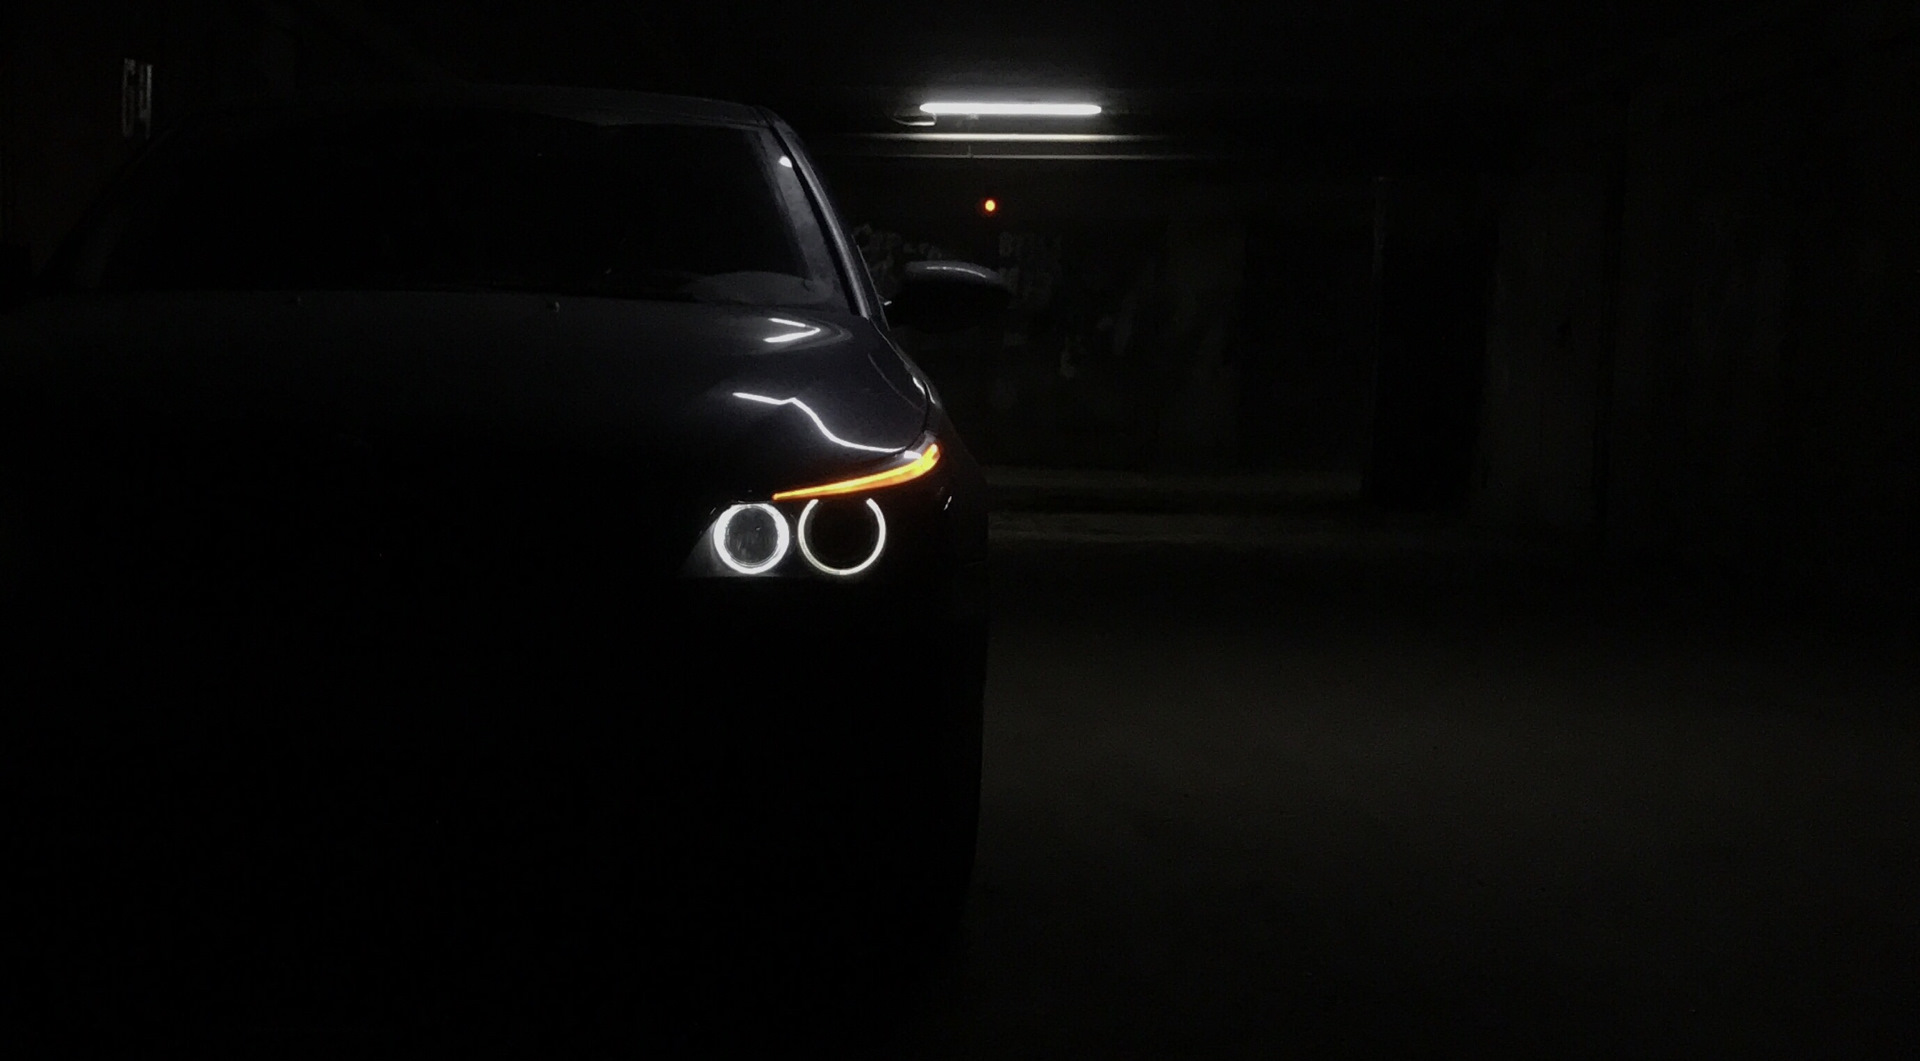 Фары в темноте видео. BMW e38 фары в темноте. BMW С японскими фарами. Знак БМВ В темноте. Запотевшая фара БМВ.